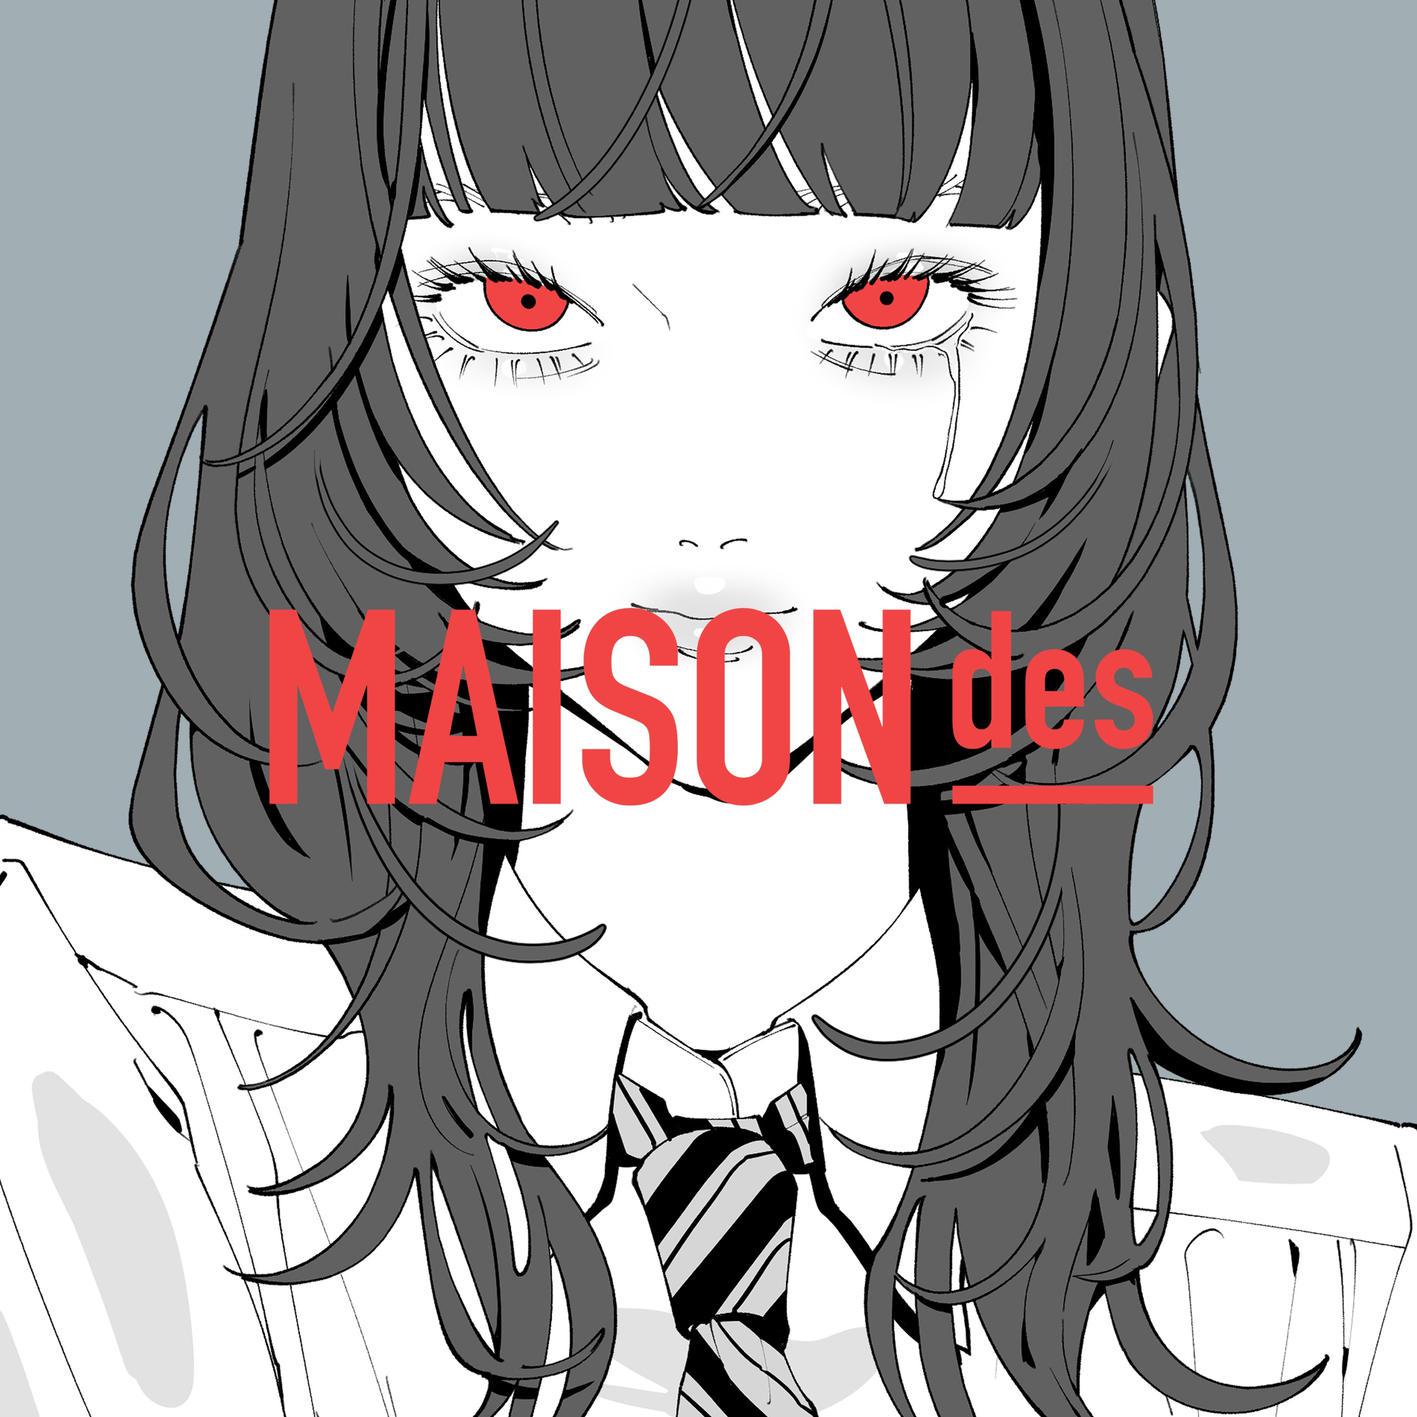 MAISONdes - 湿っぽいね feat. 相沢, 式浦躁吾